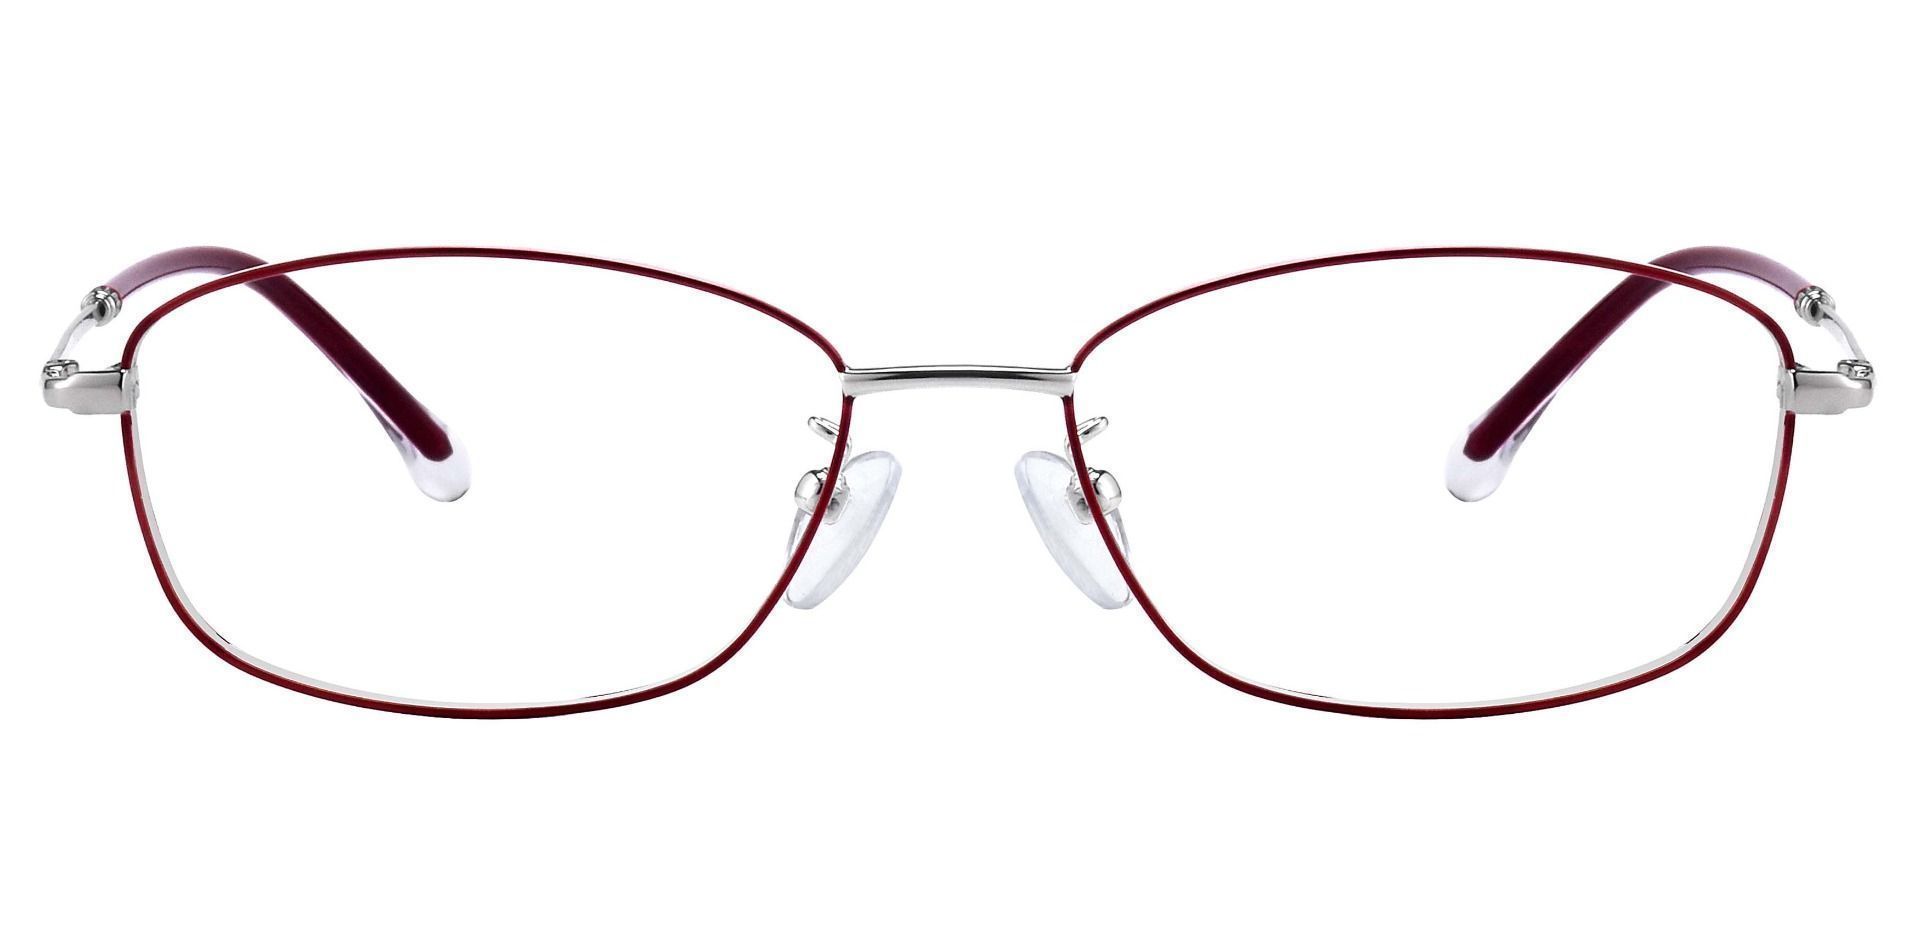 Ginger Oval Eyeglasses Frame - Red